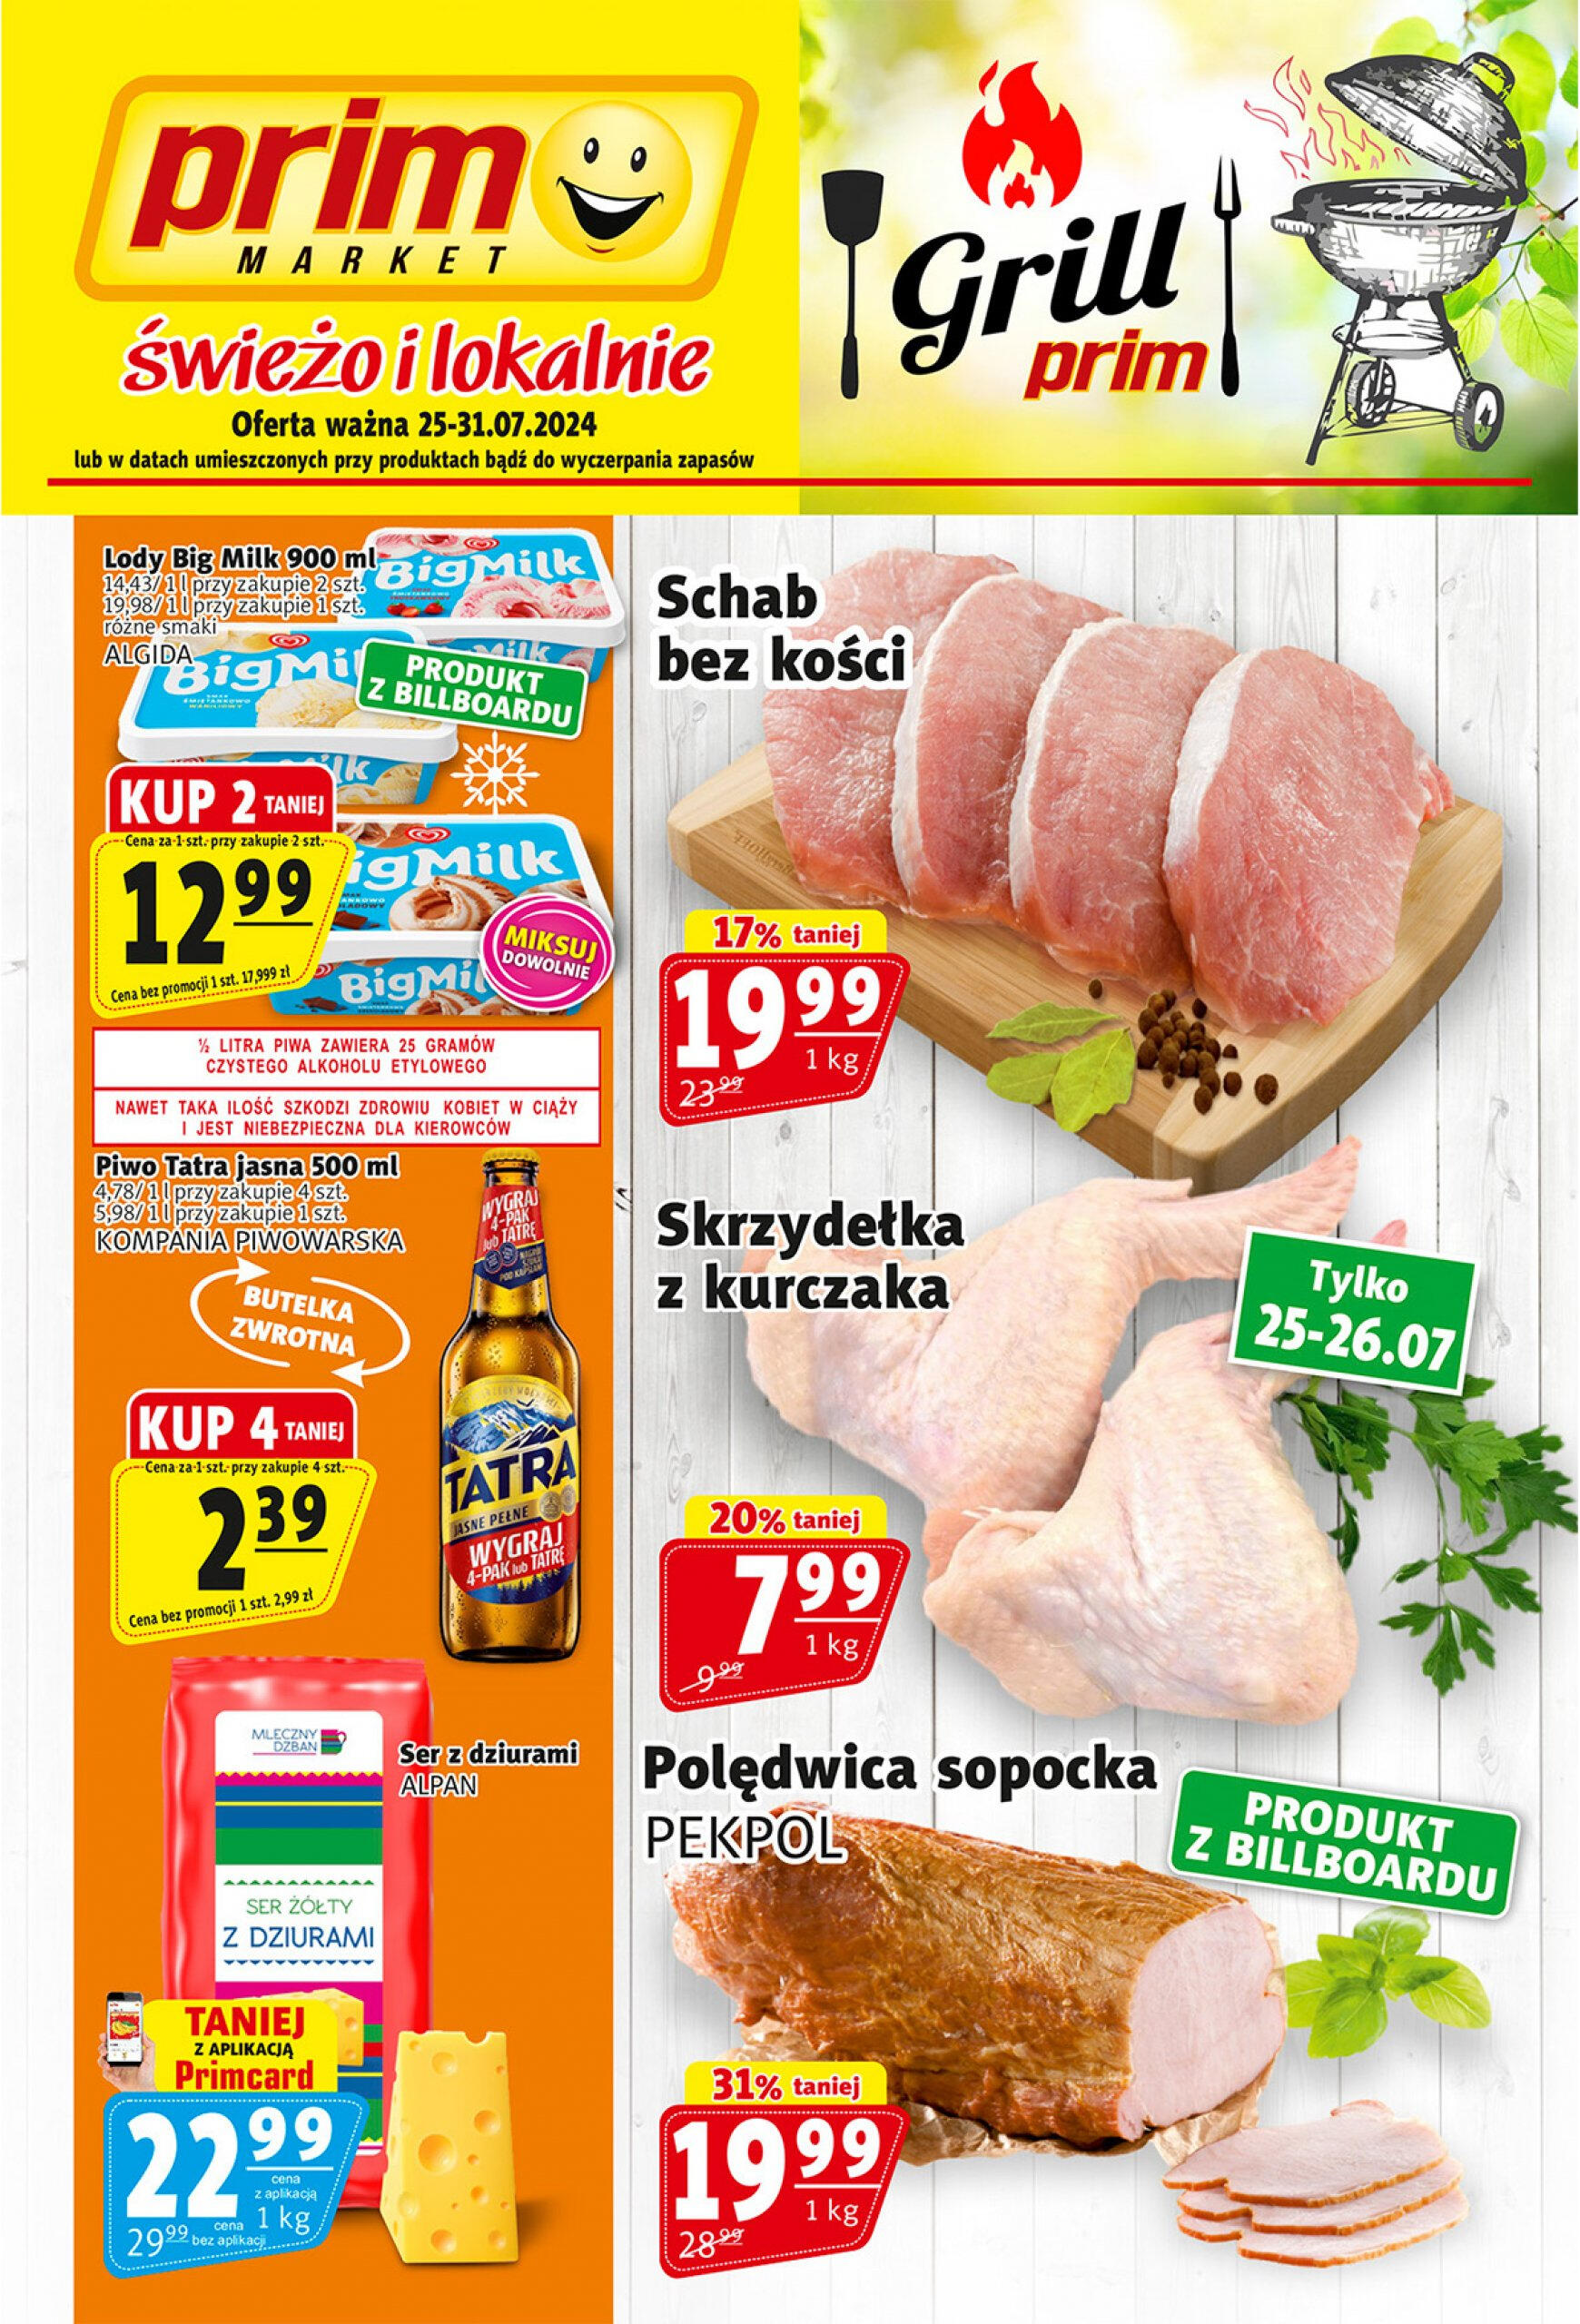 prim-market - Prim Market gazetka aktualna ważna od 25.07. - 31.07.